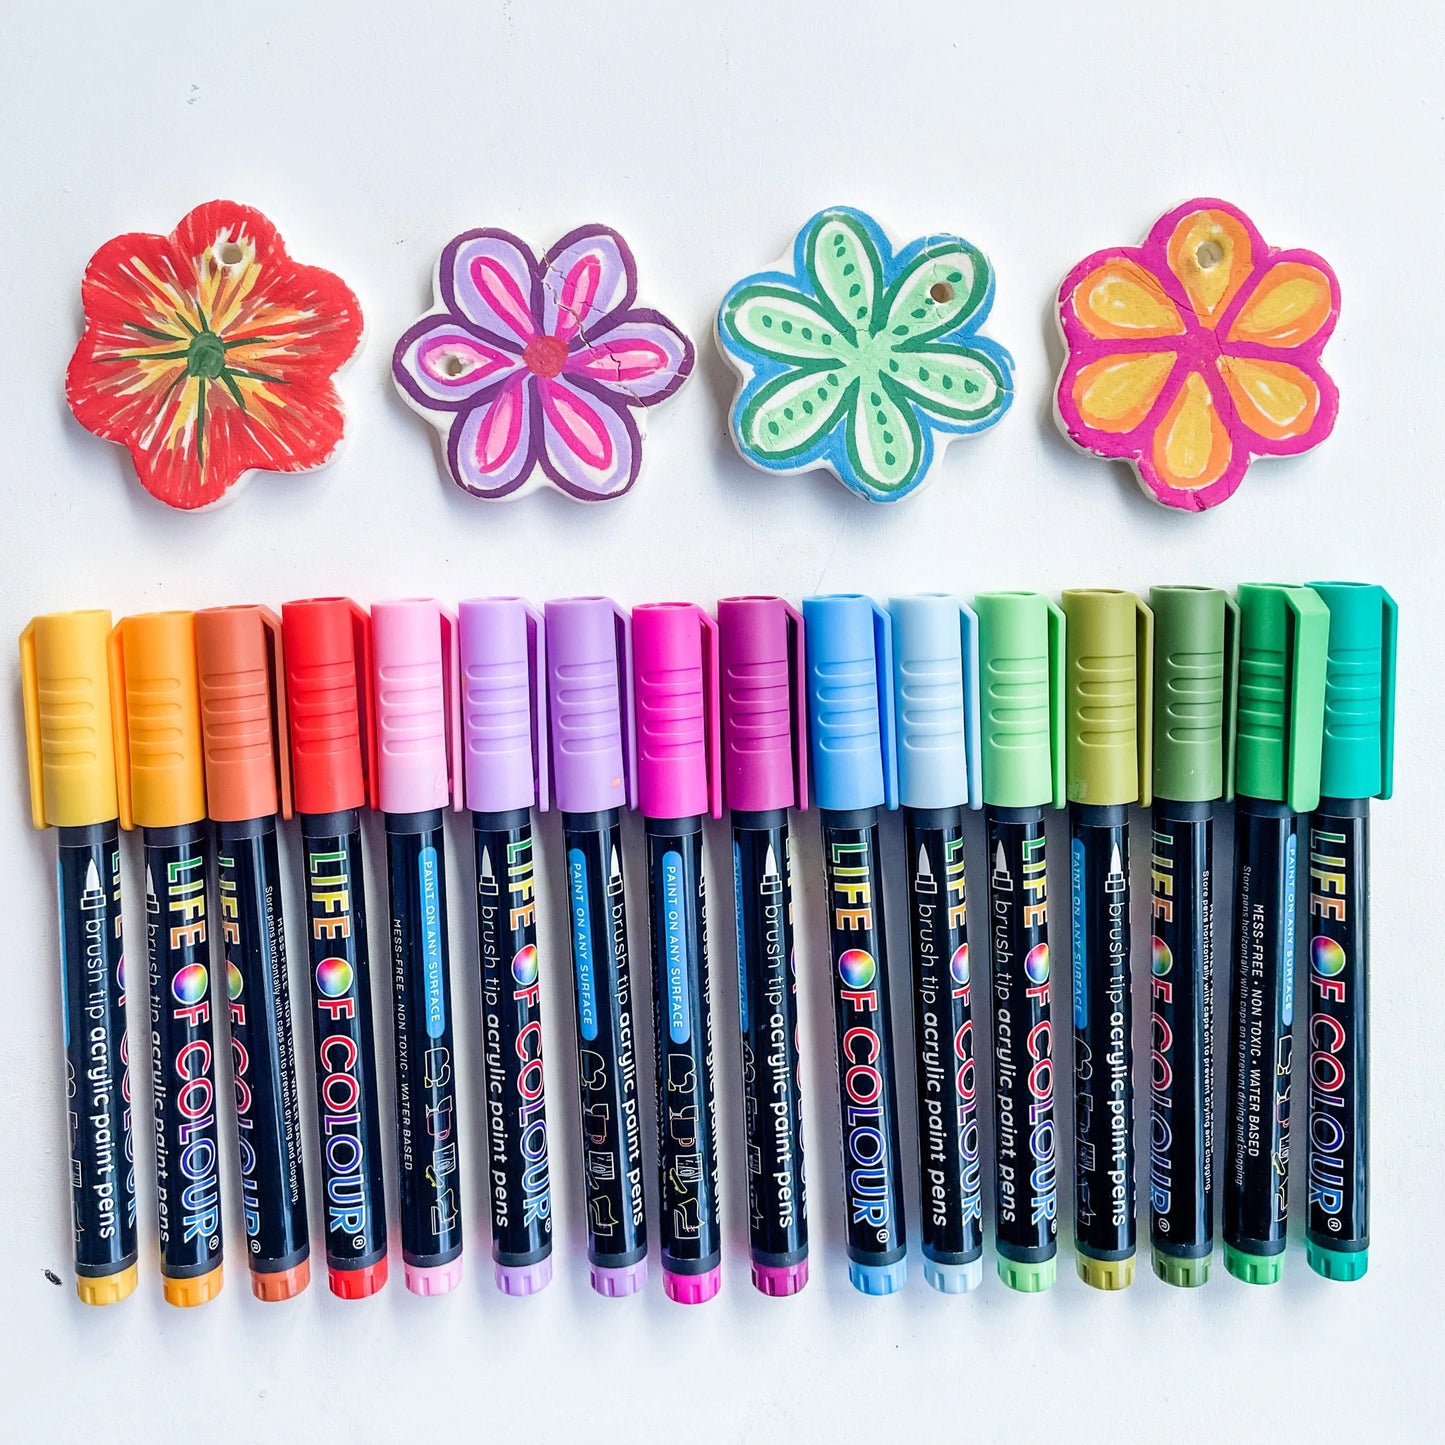 Brush Tip Acrylic Paint Pens | Floral